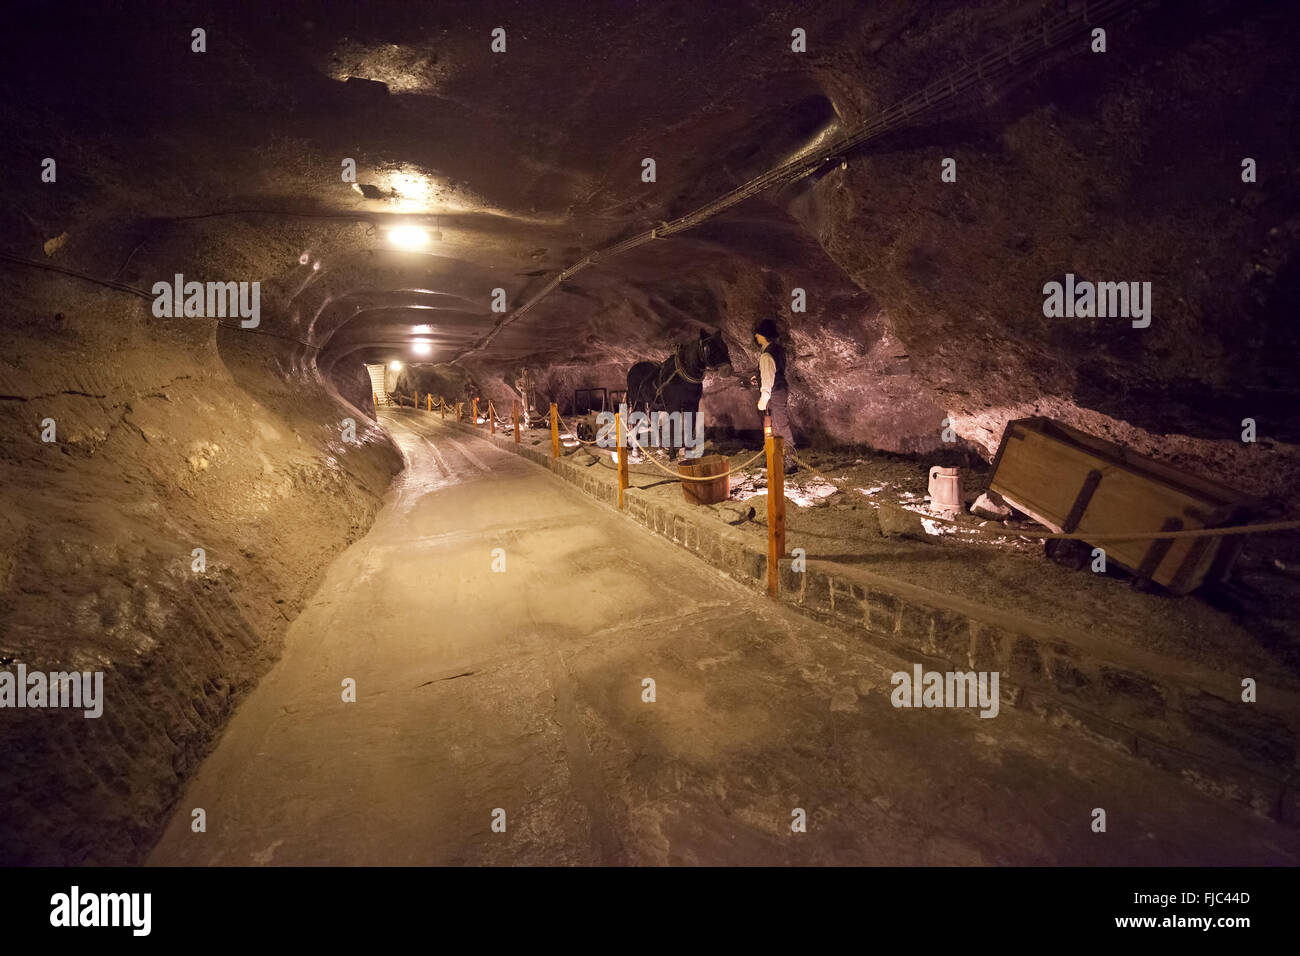 Europe, Poland, Wieliczka Salt Mine, Sielec Chamber, miners at work transporting salt exhibition Stock Photo